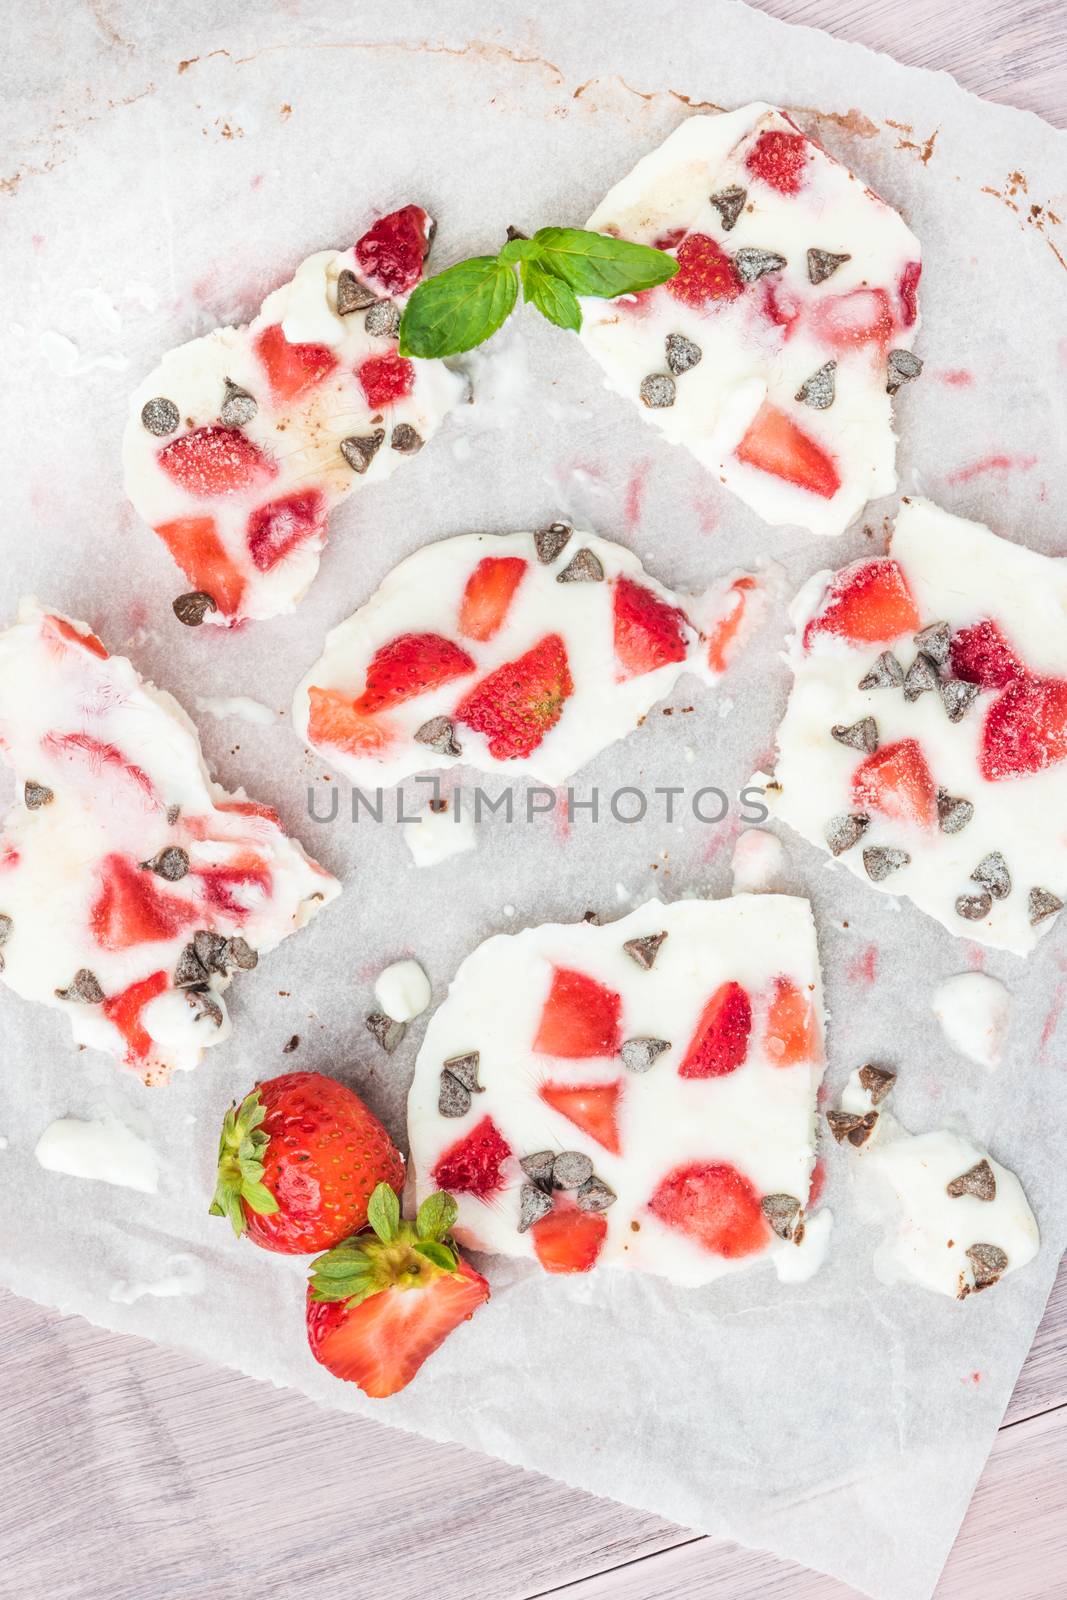 Homemade healthy frozen strawberry yogurt bark. by AnaMarques